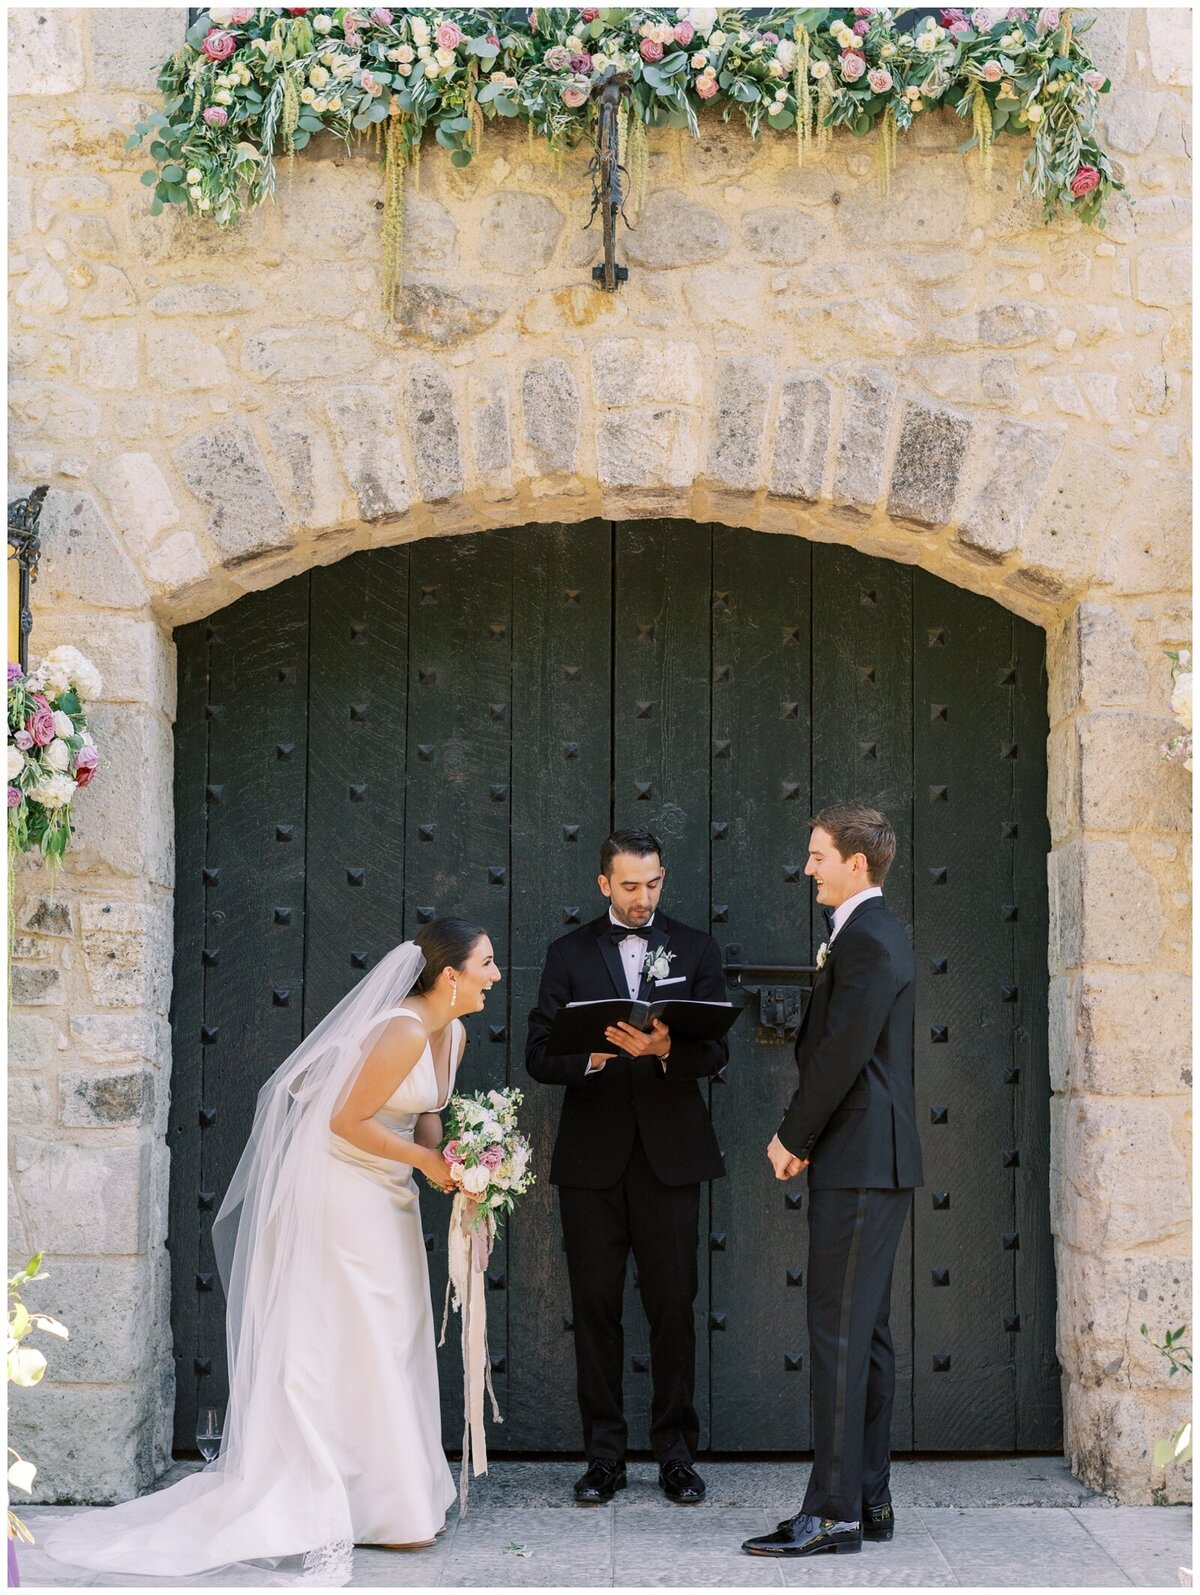 Kelsey-Alex-Sonoma-Buena-Vista-Winery-Wedding-Cassie-Valente-Photography-0572